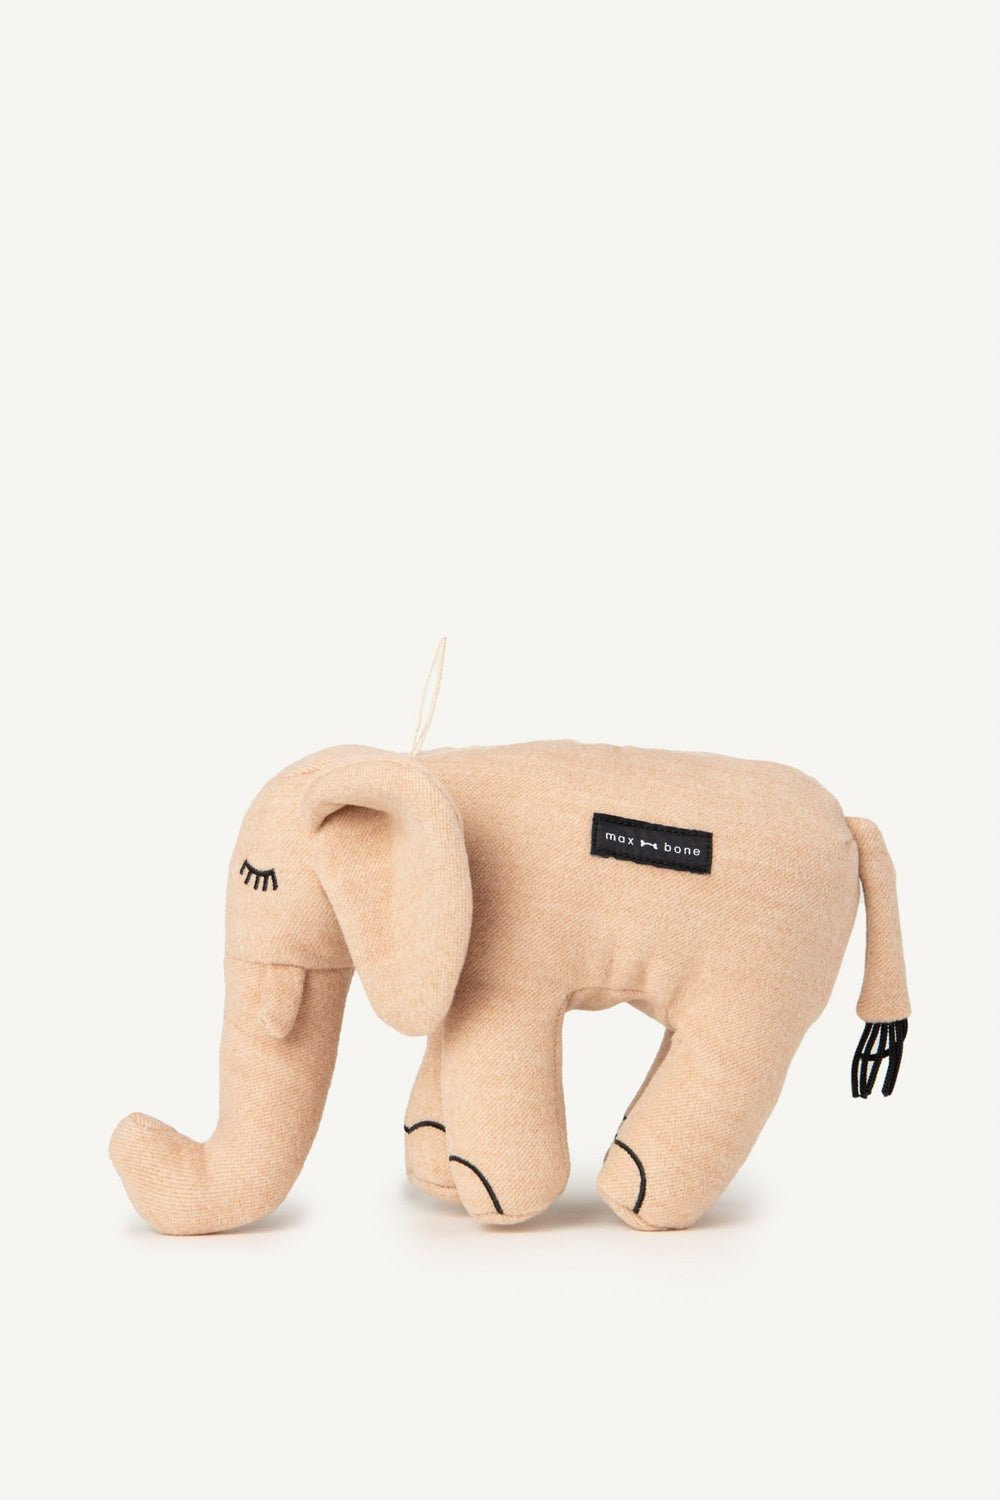 Elsie Elephant Plush Toy